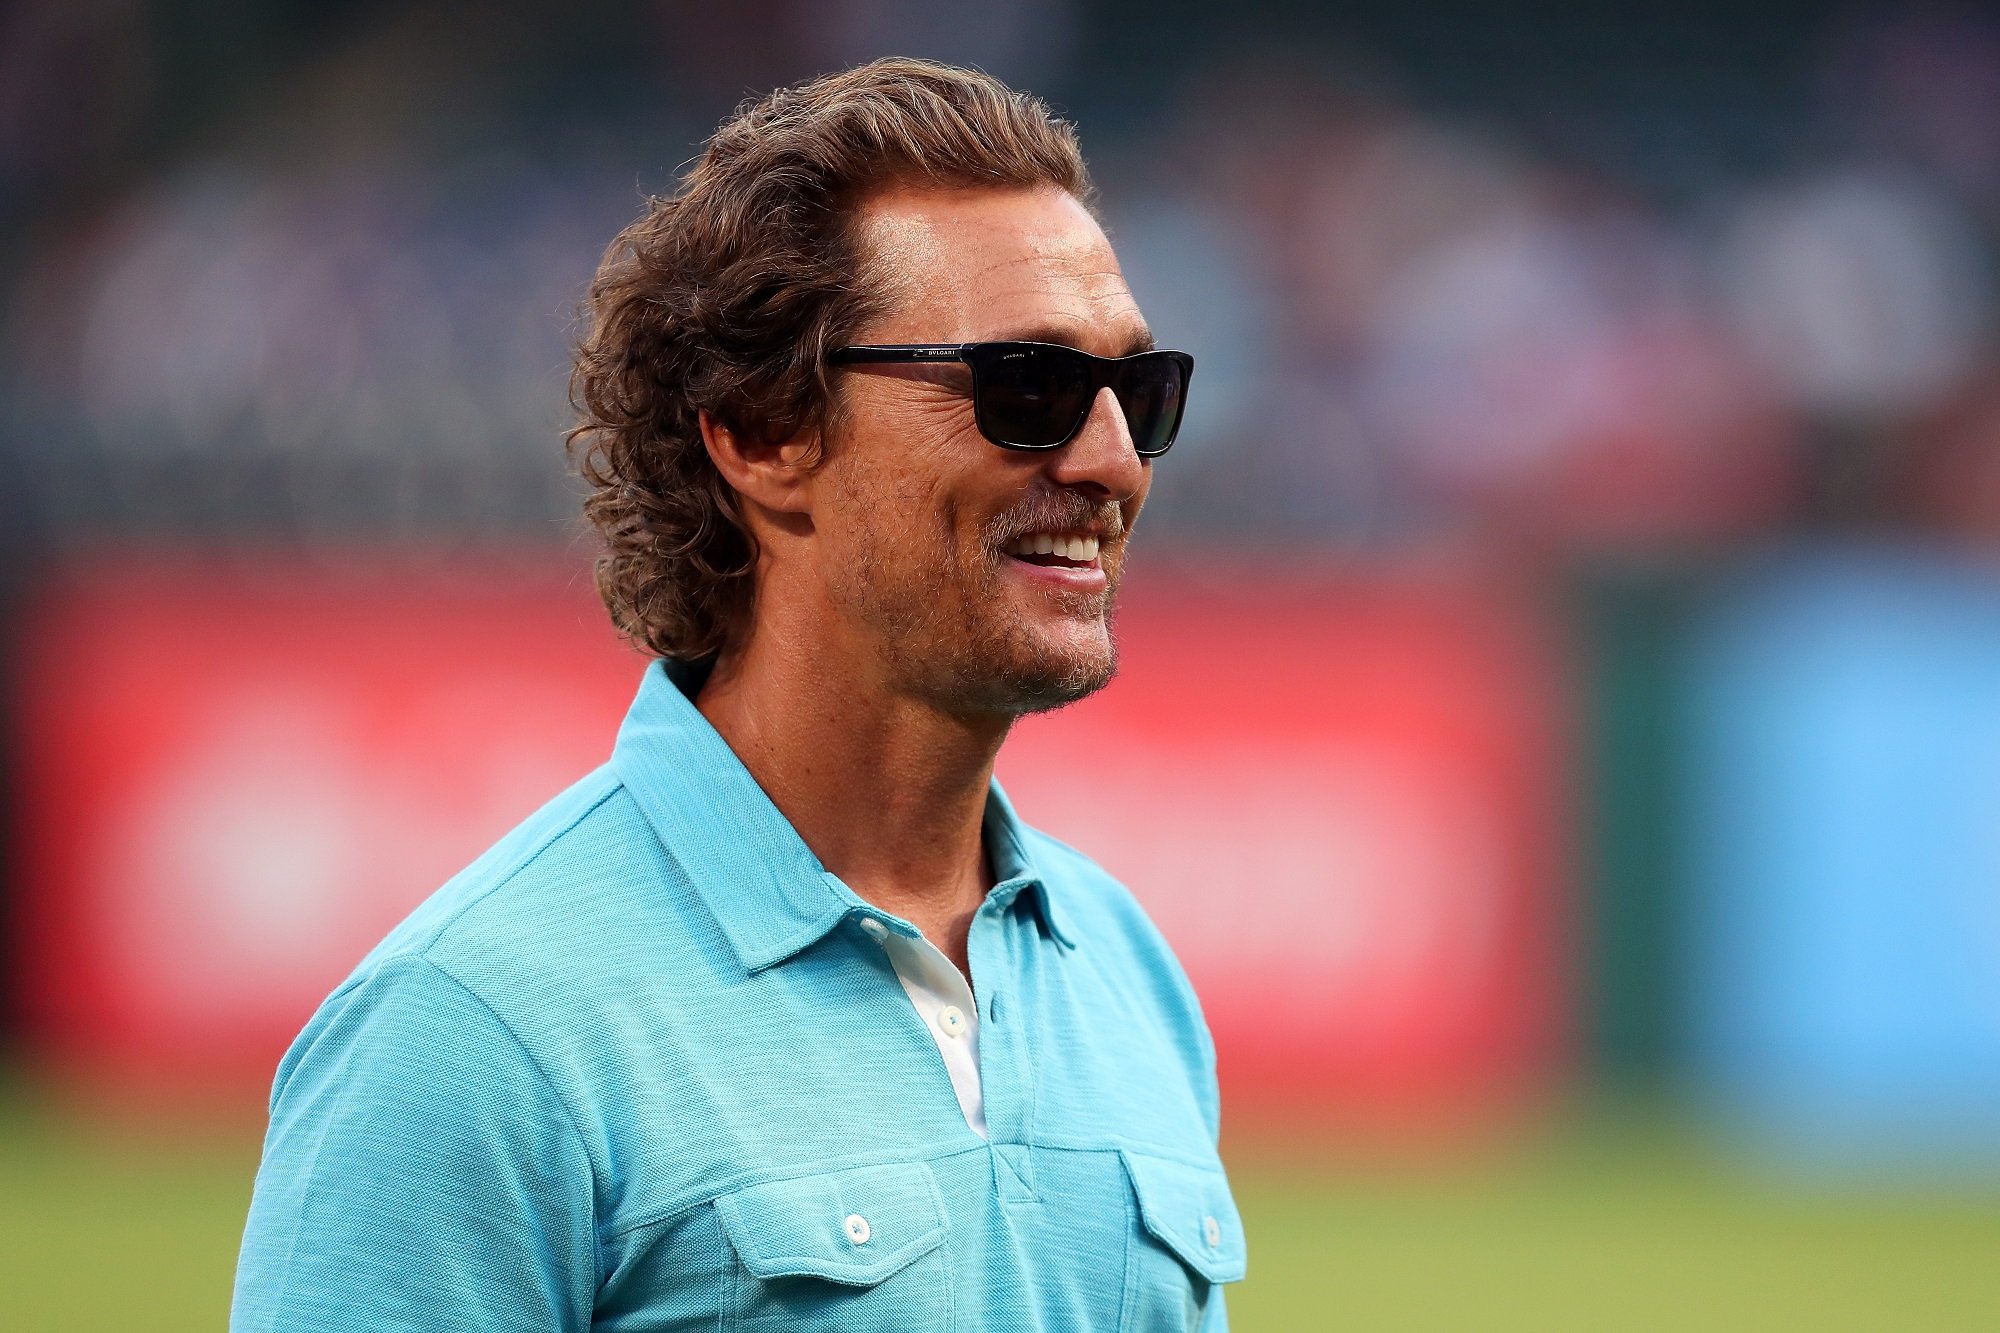 Matthew McConaughey on a baseball field